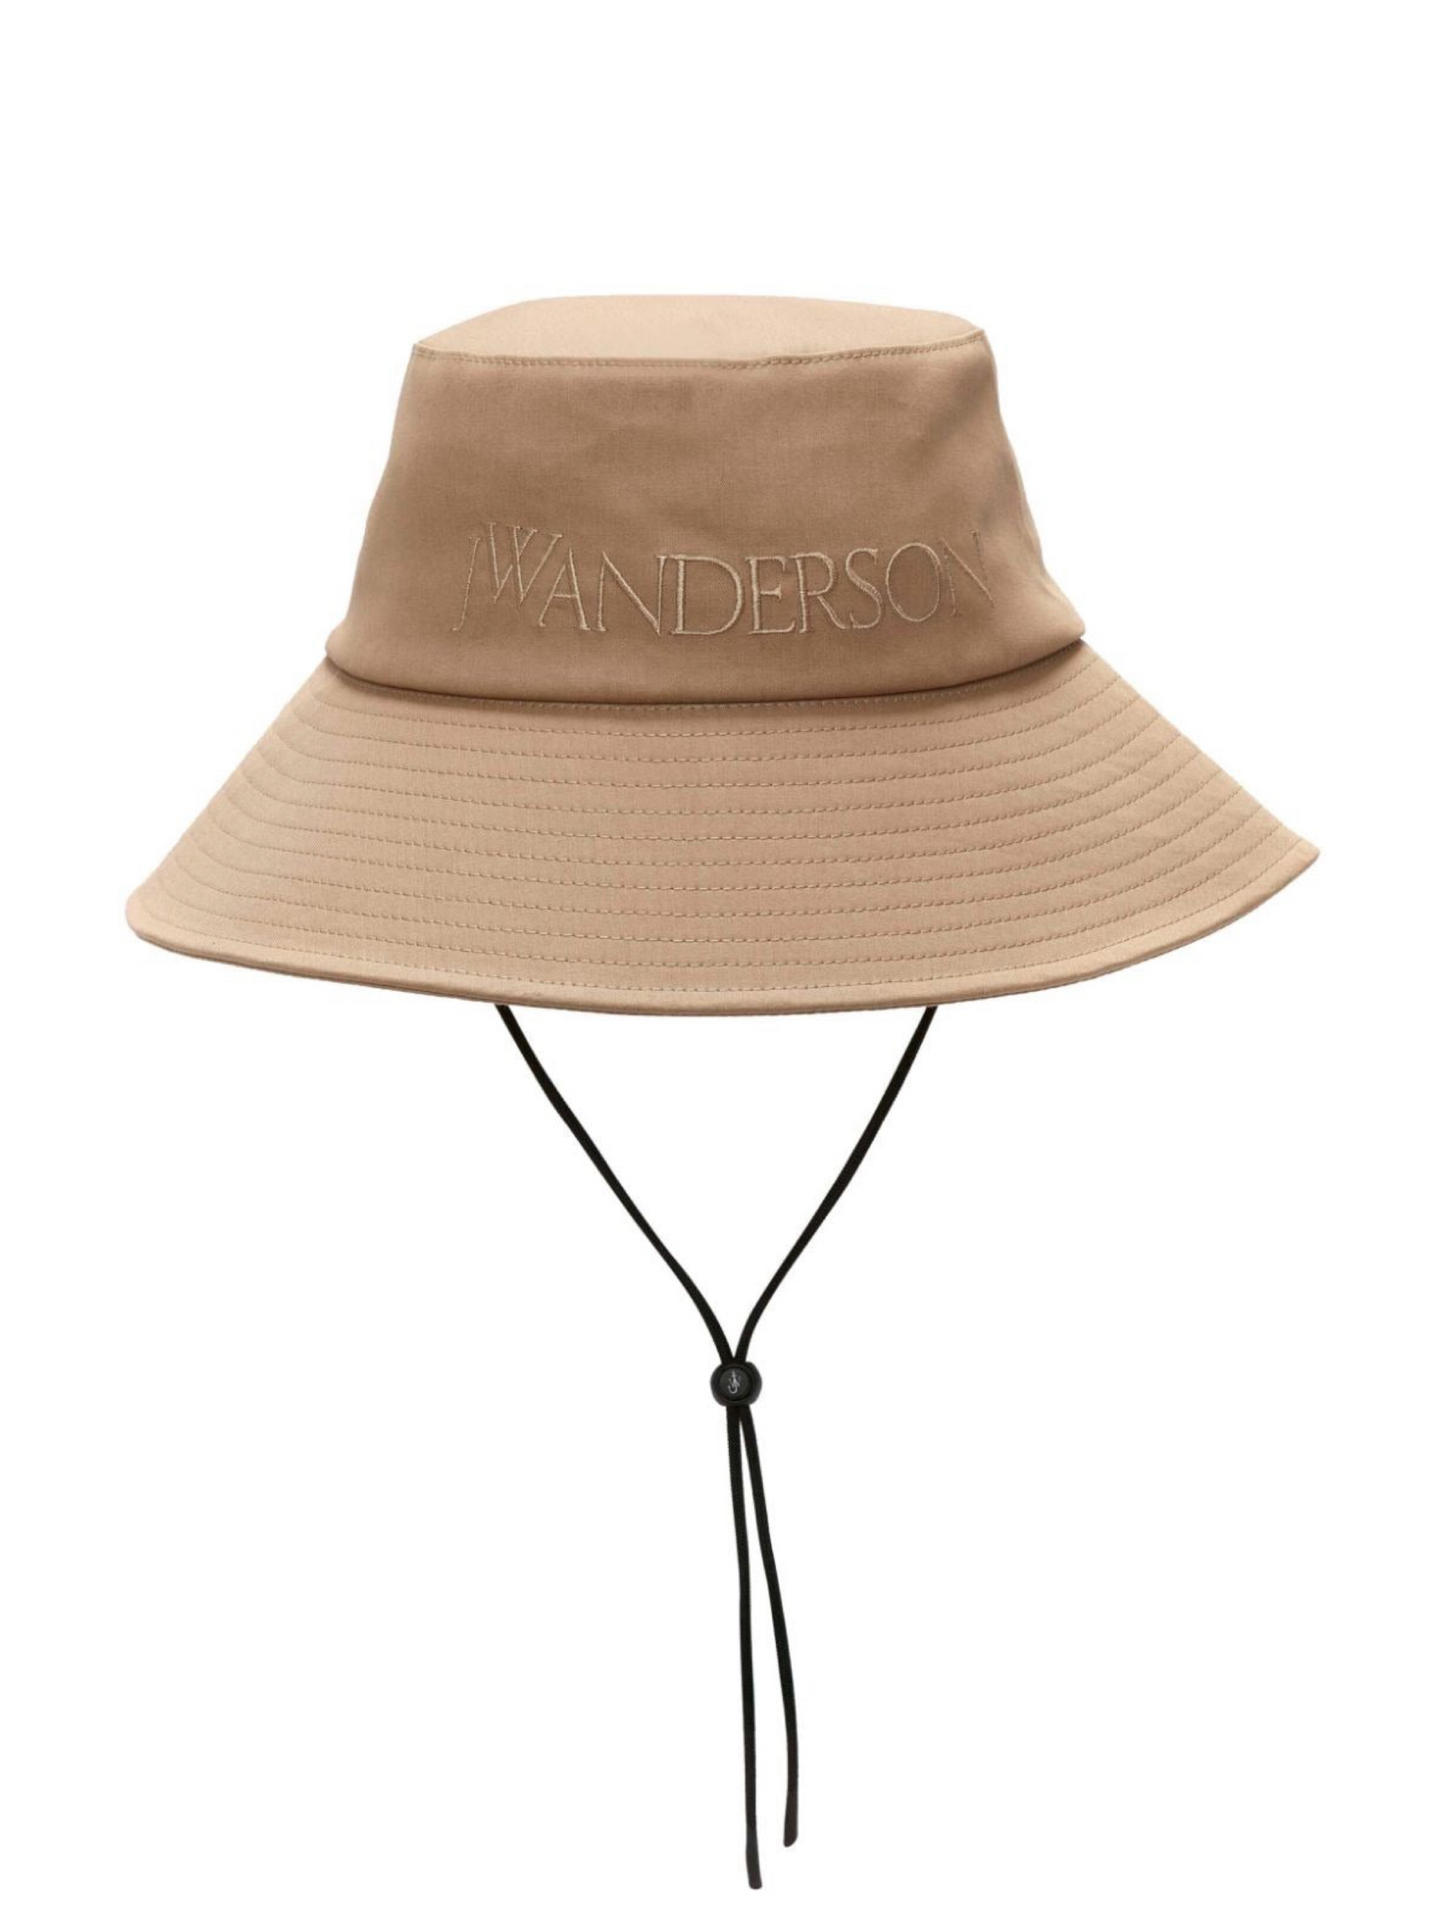 JW Anderson Logo Shade Hat in Beige